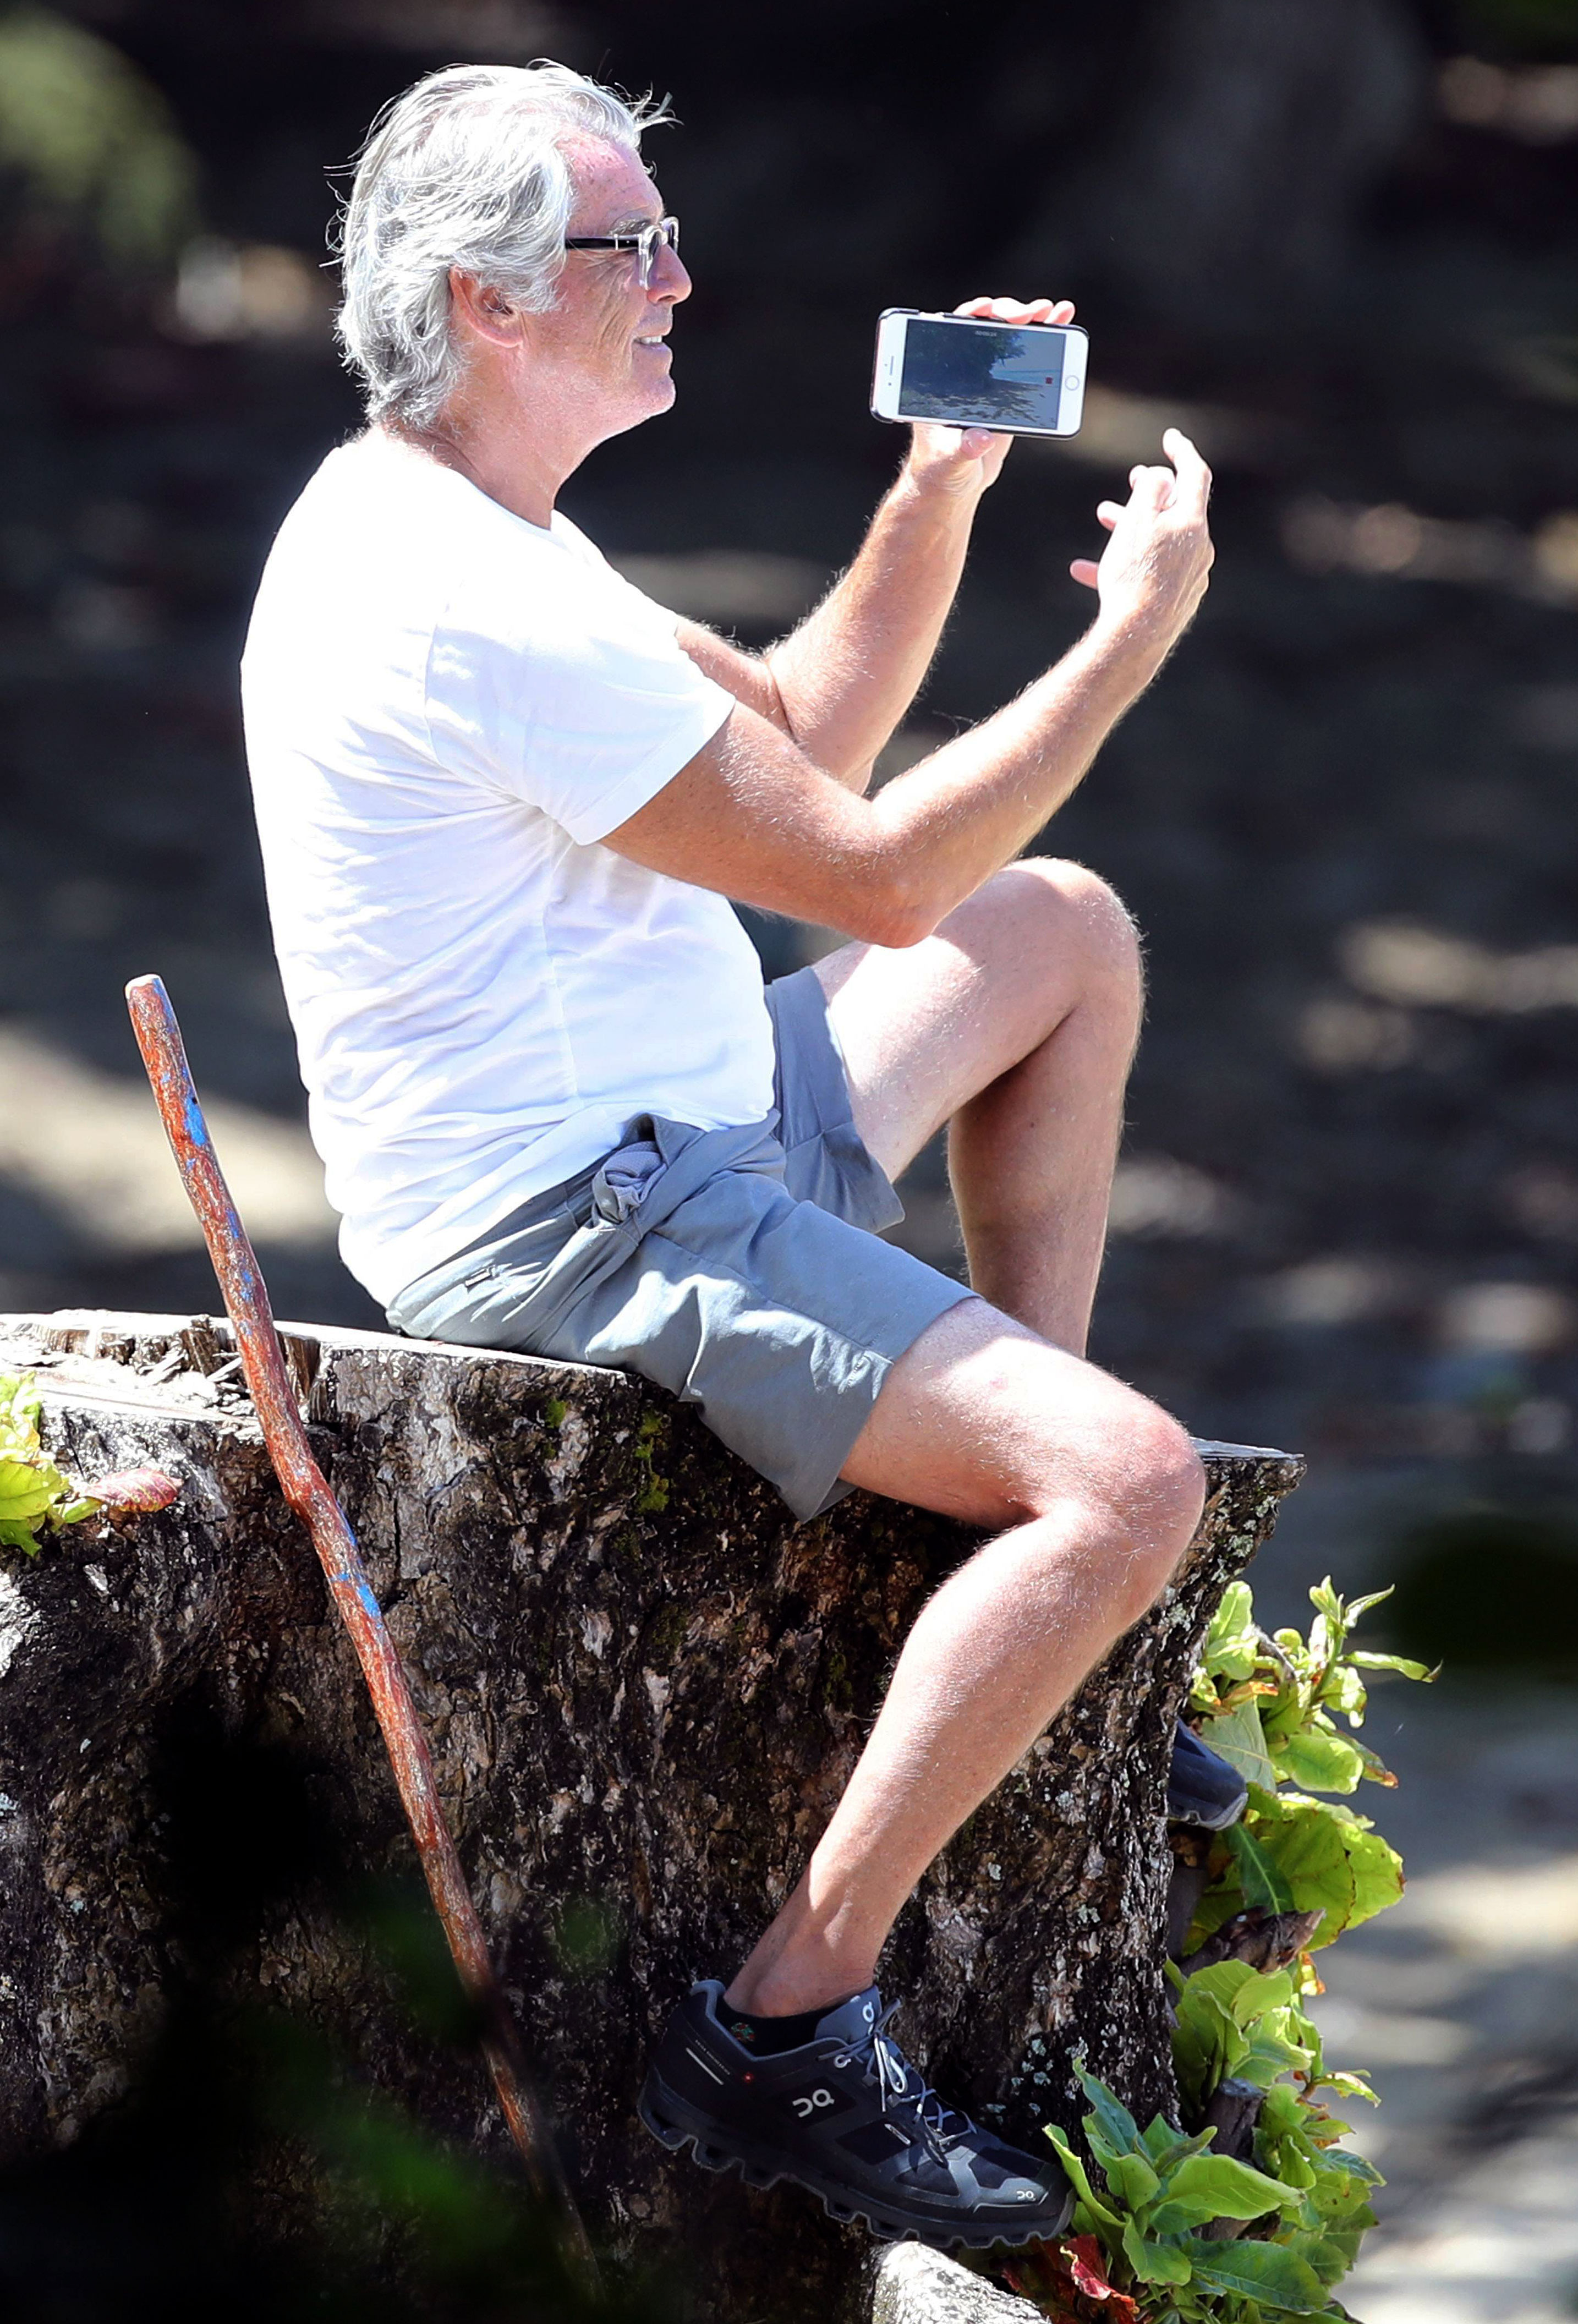 James Bond star Pierce Brosnan, 66, shows off his silver locks during  lockdown stroll in Hawaii – The US Sun